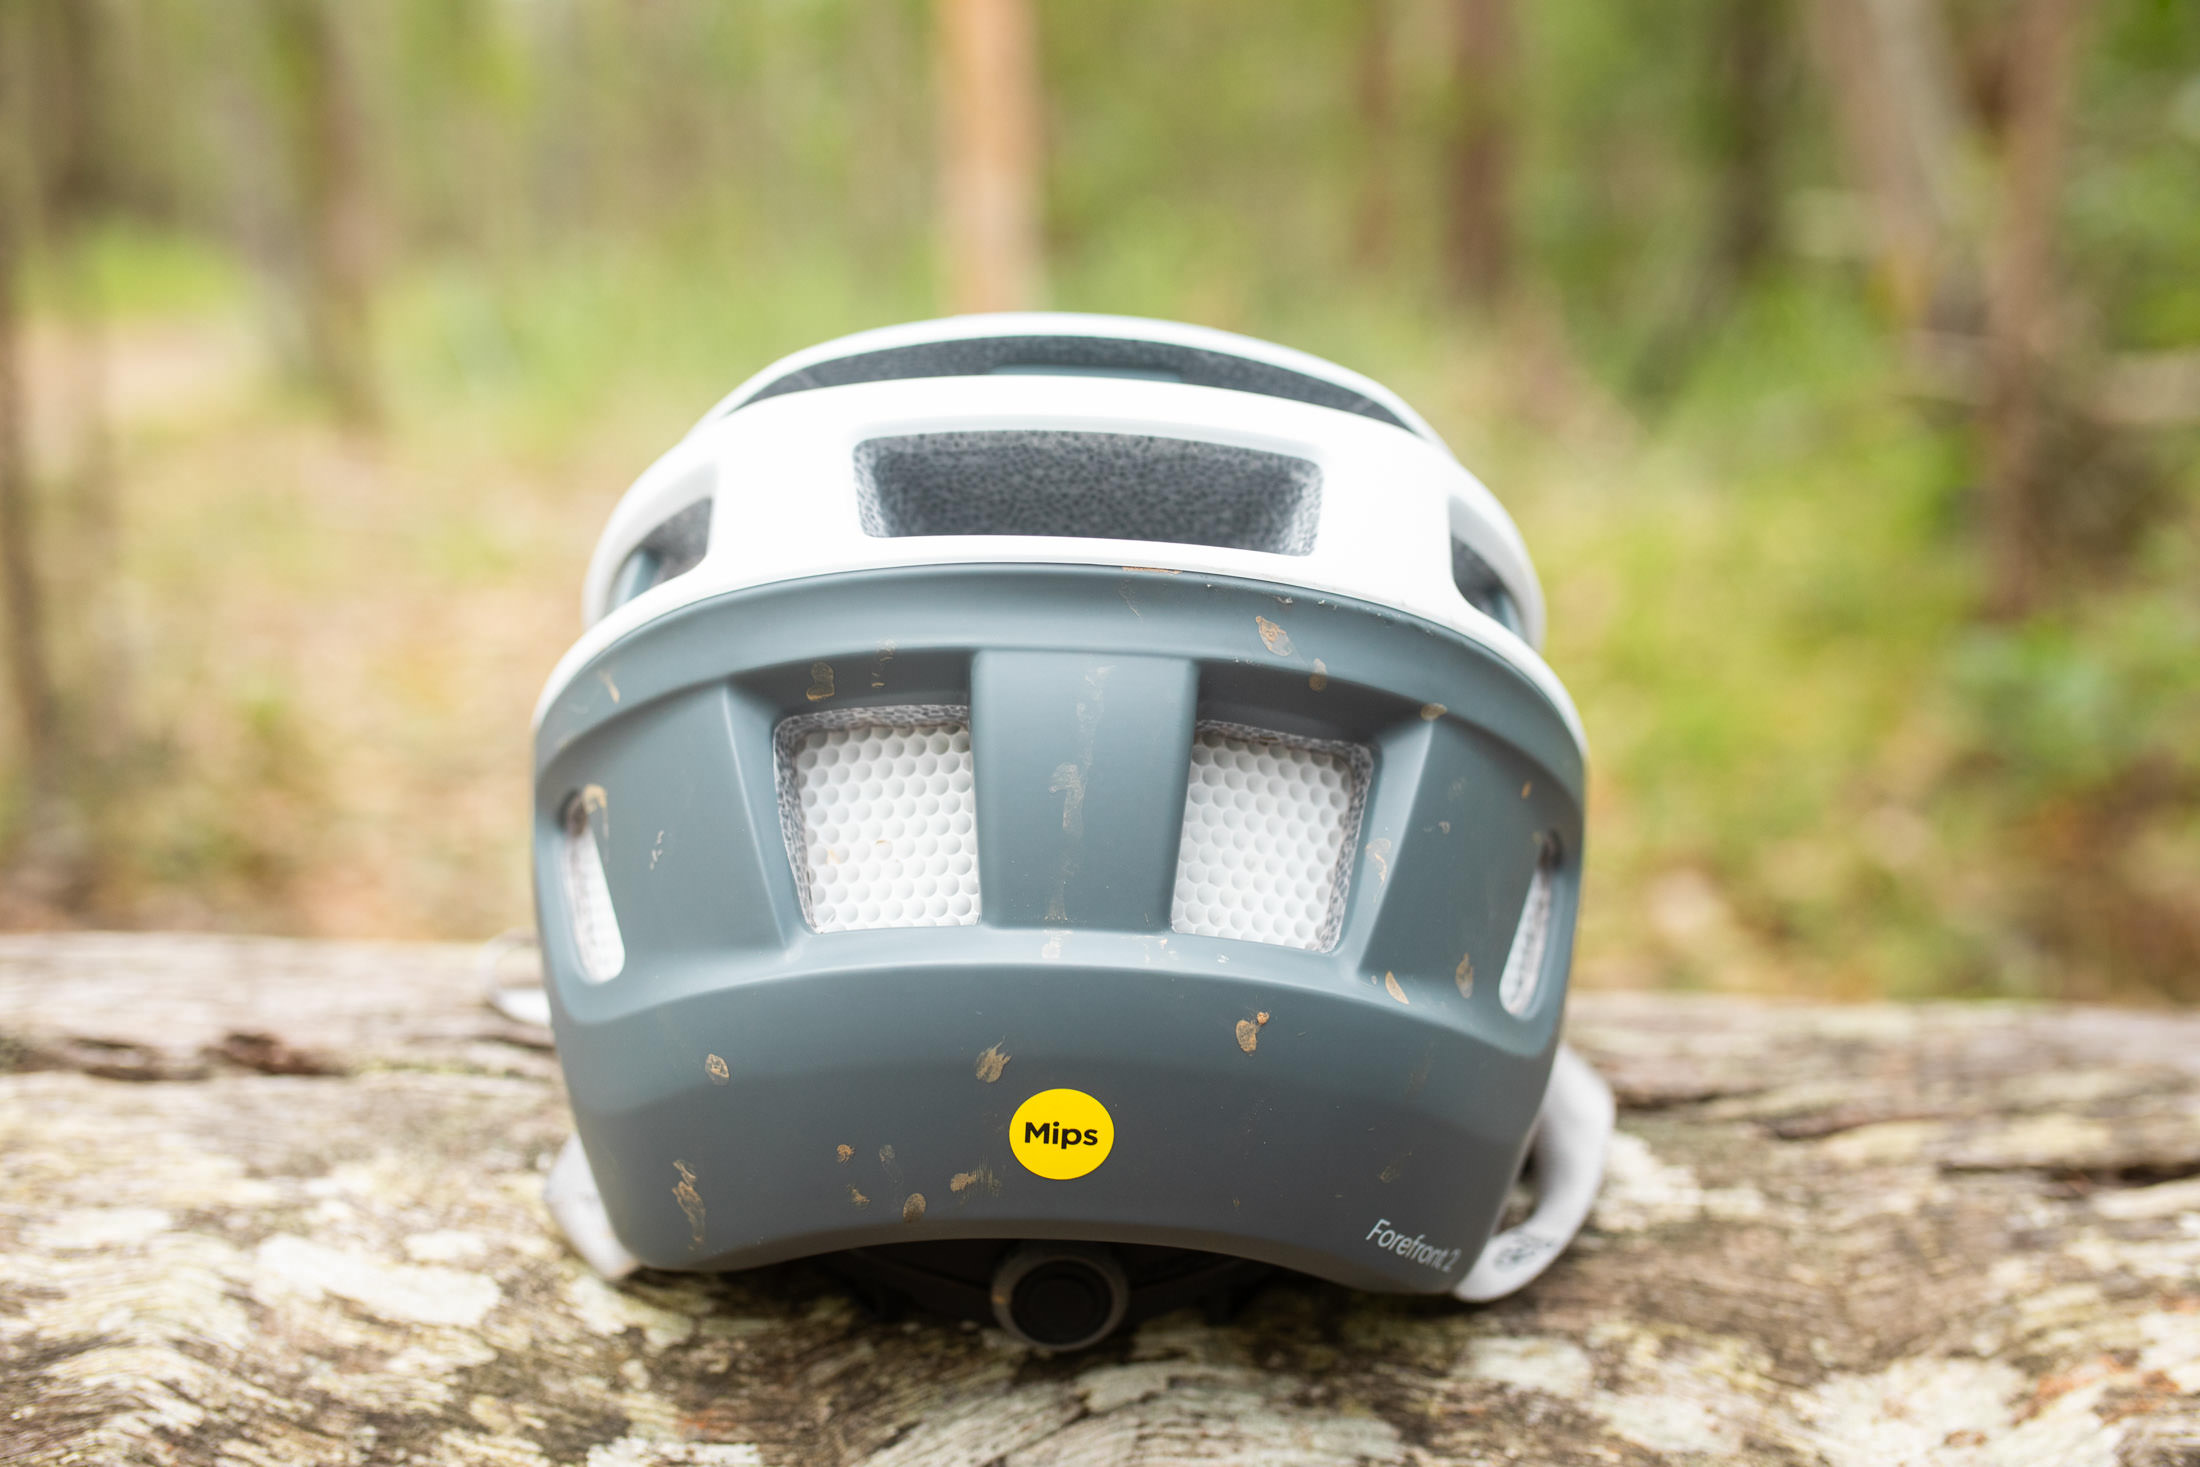 Smith Forefront 2 mountain bike helmet